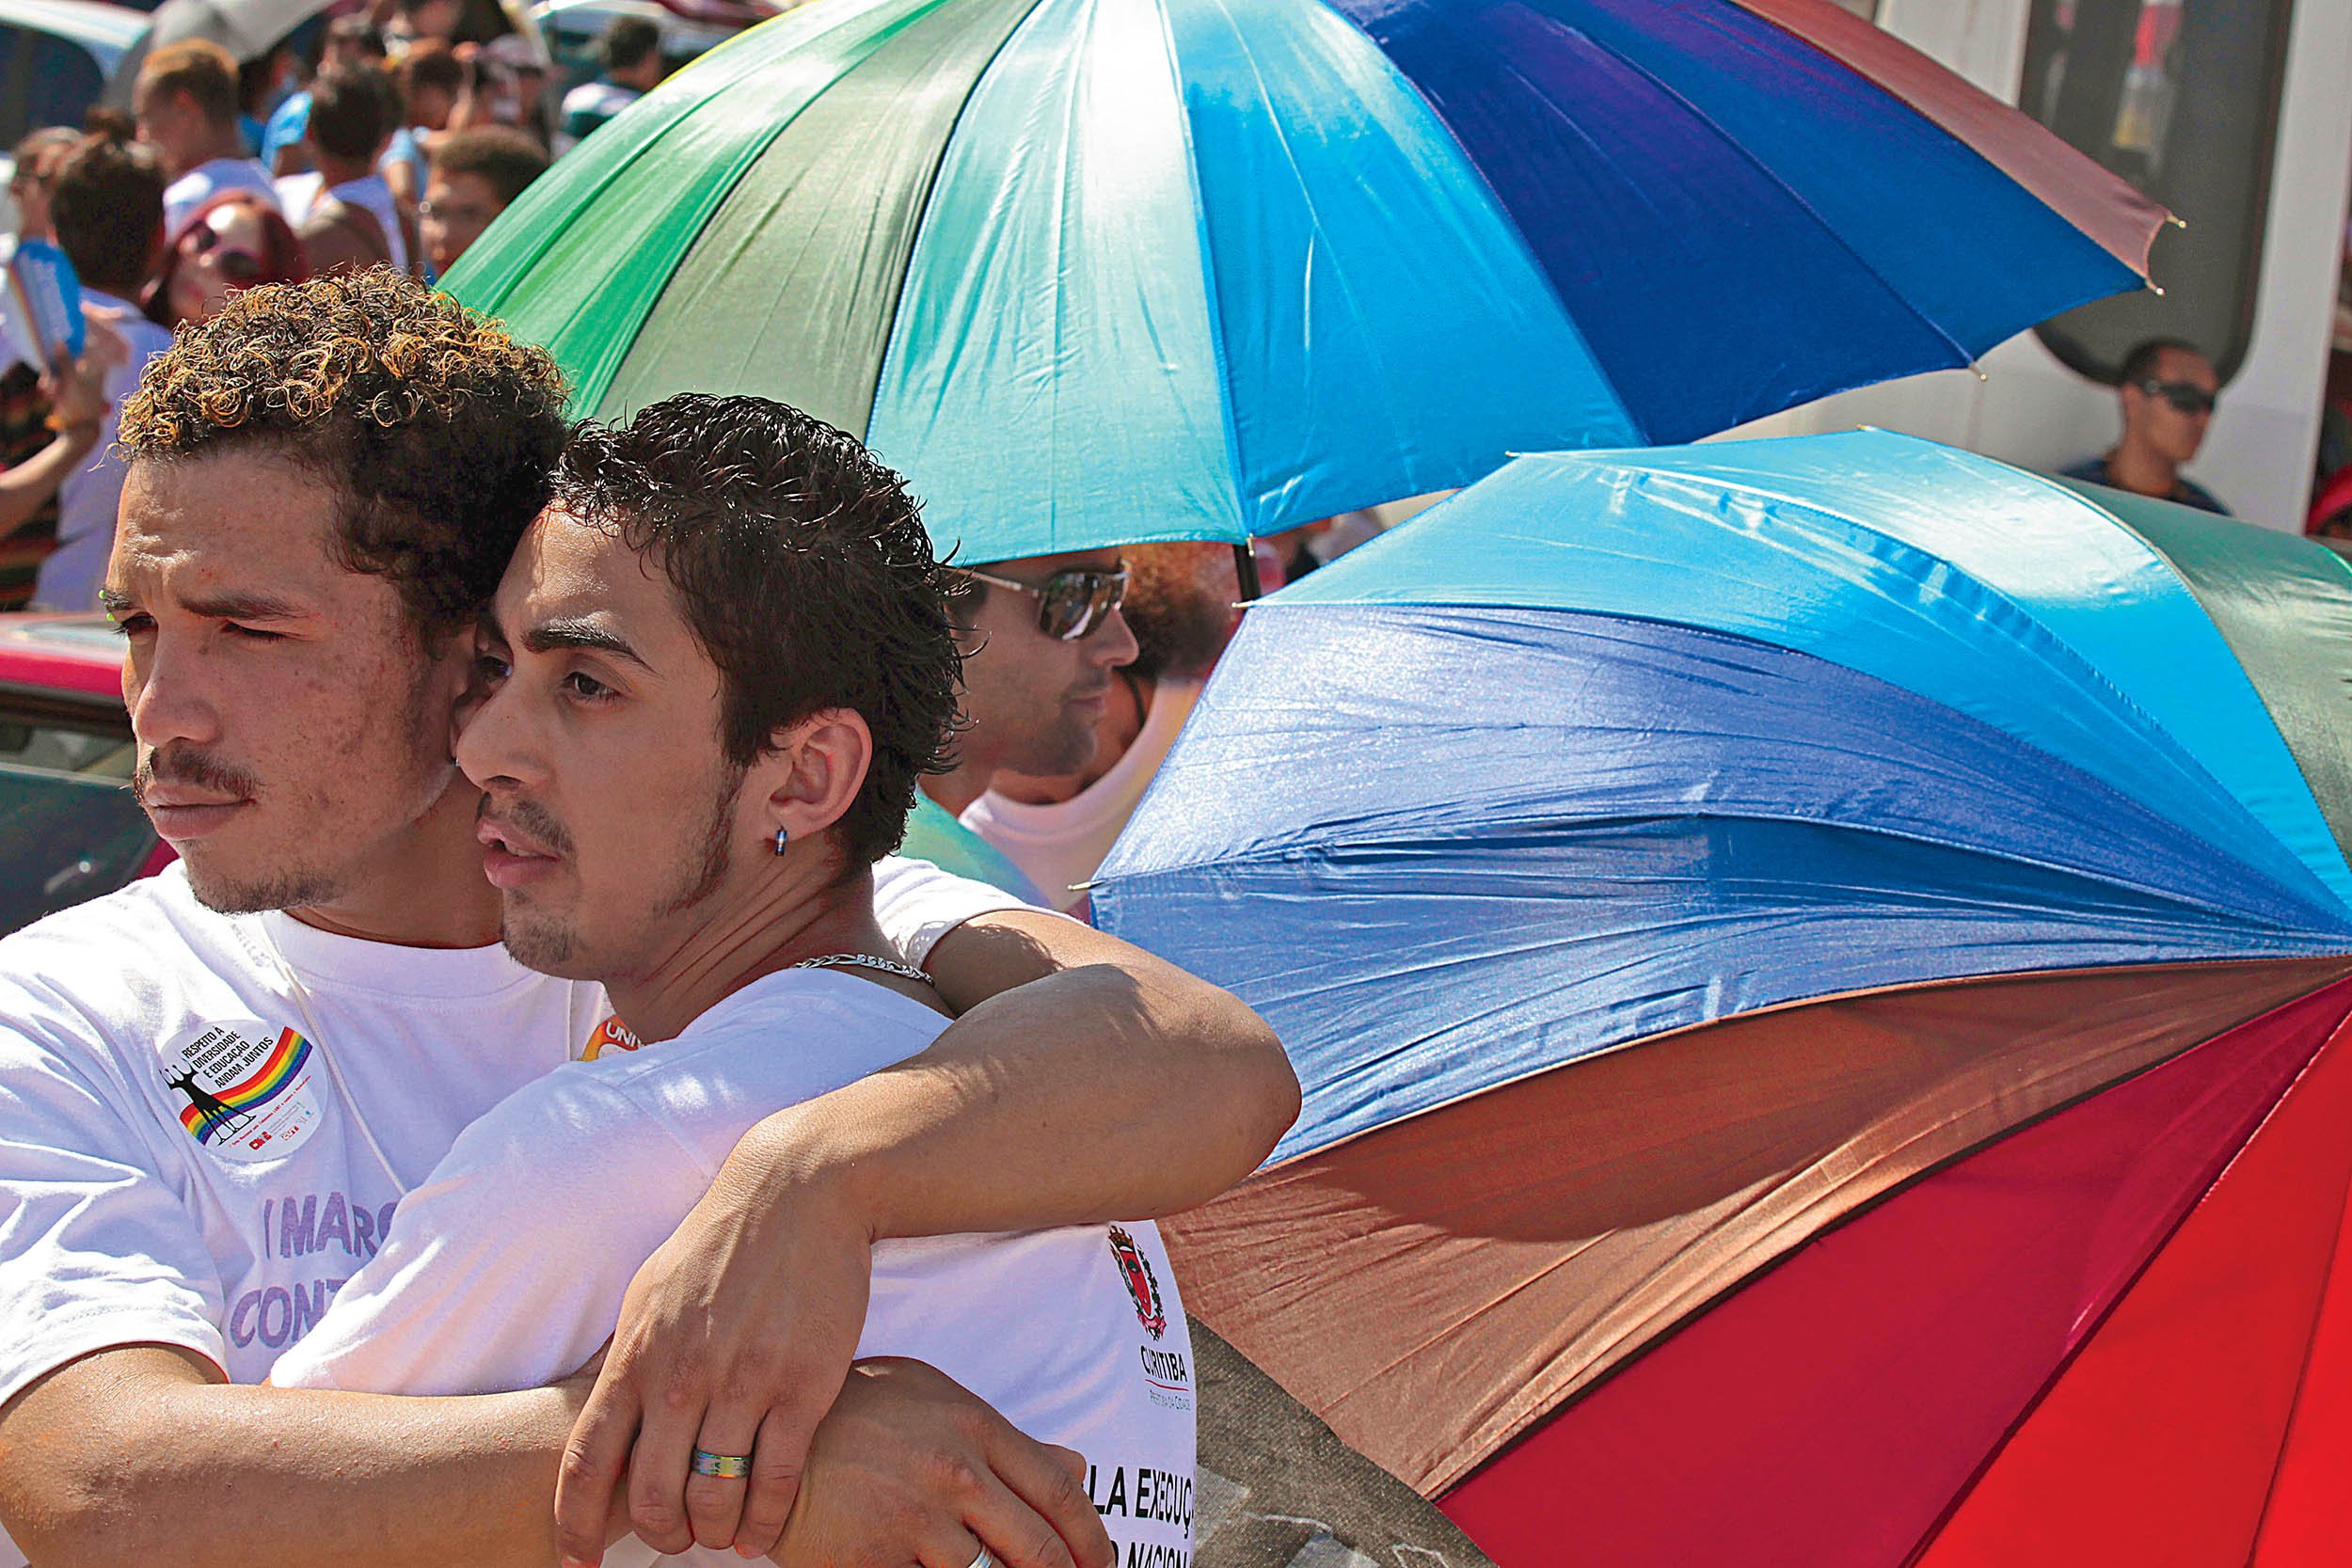 Behind Brazil S Gay Pride Parades A Struggle With Homophobic Violence